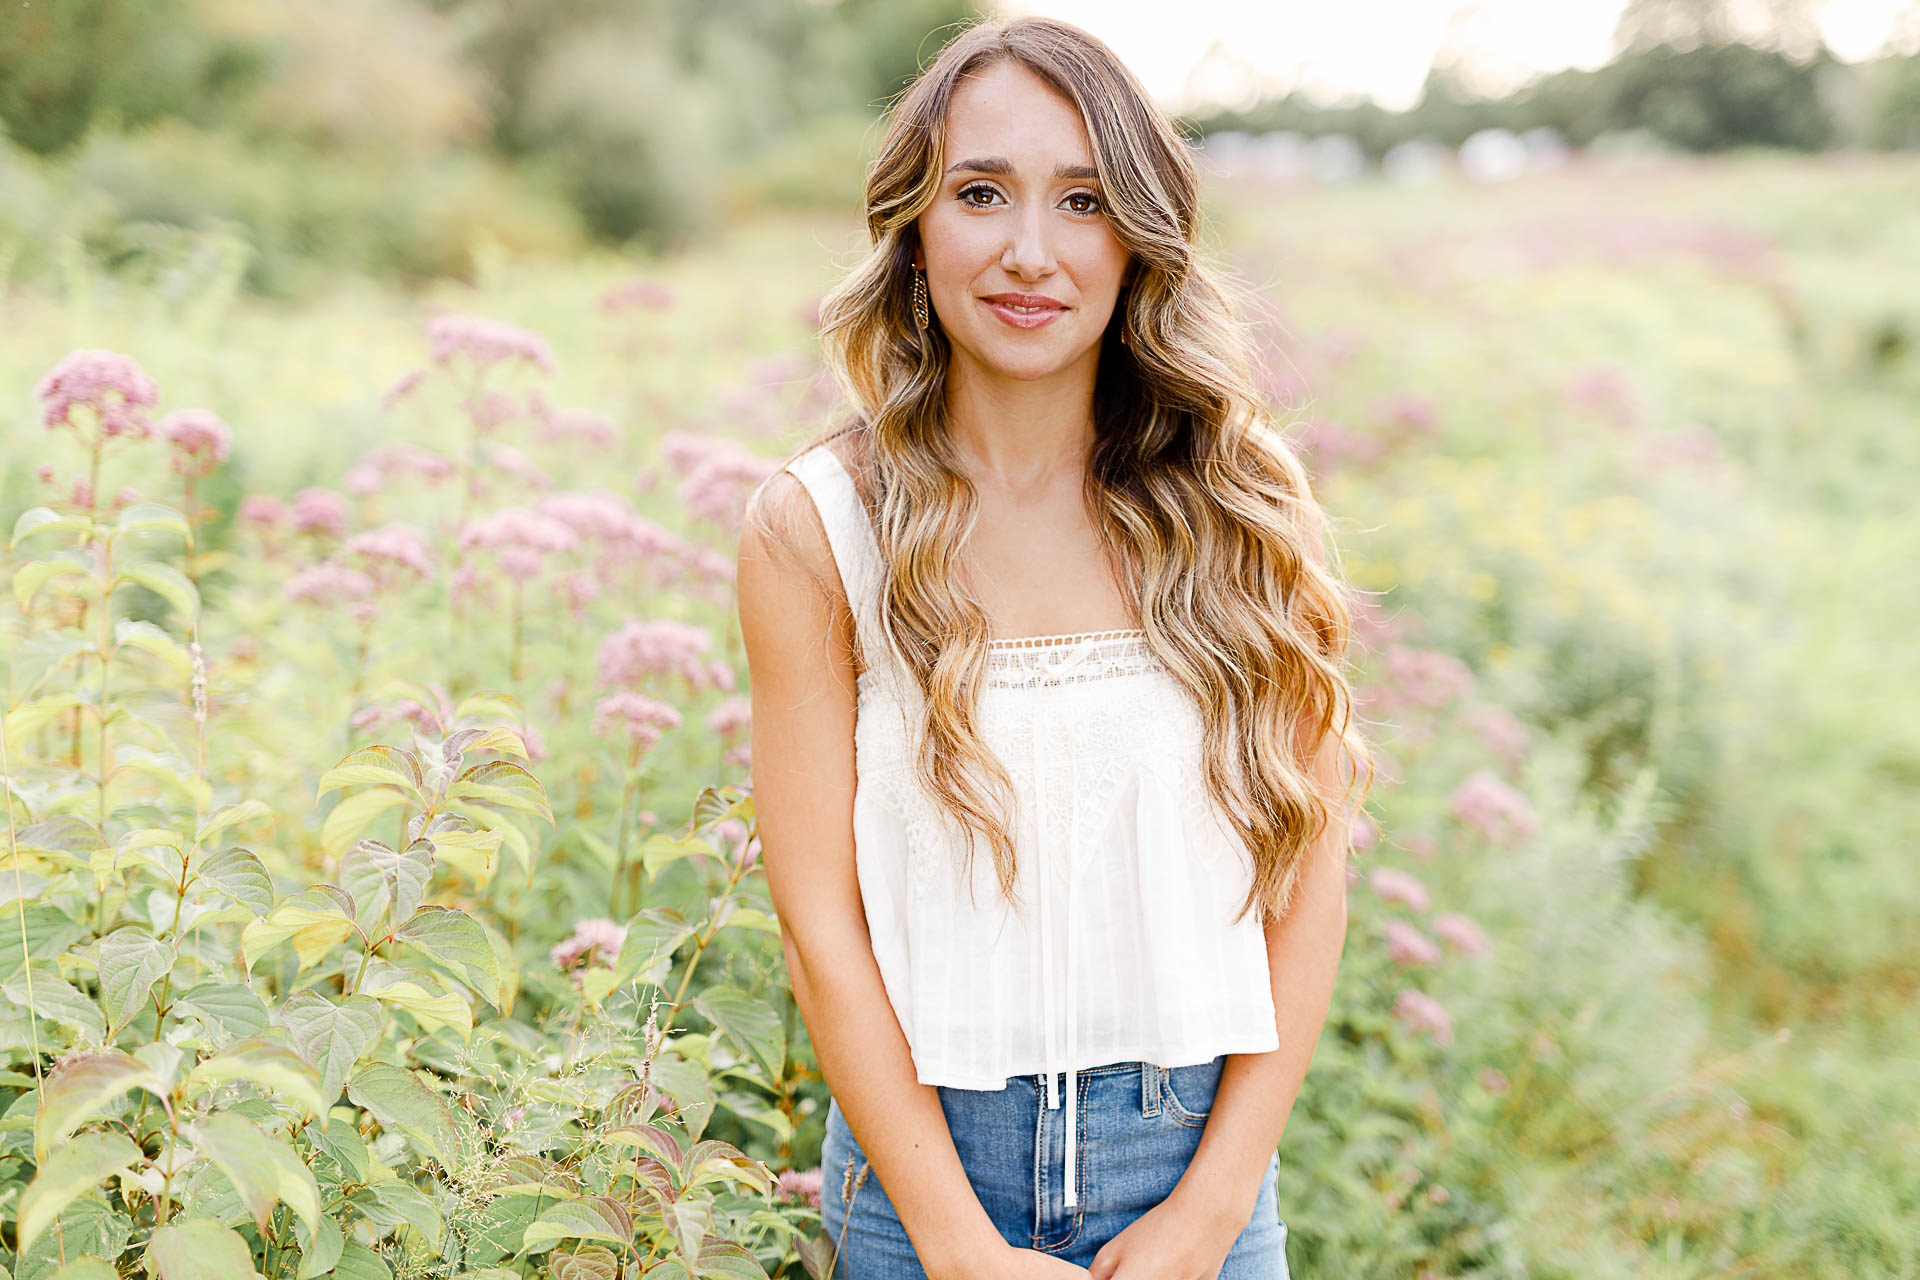 Photo by Scituate Senior Portrait Photographer Christina Runnals | High school senior girl standing in a purple flower field